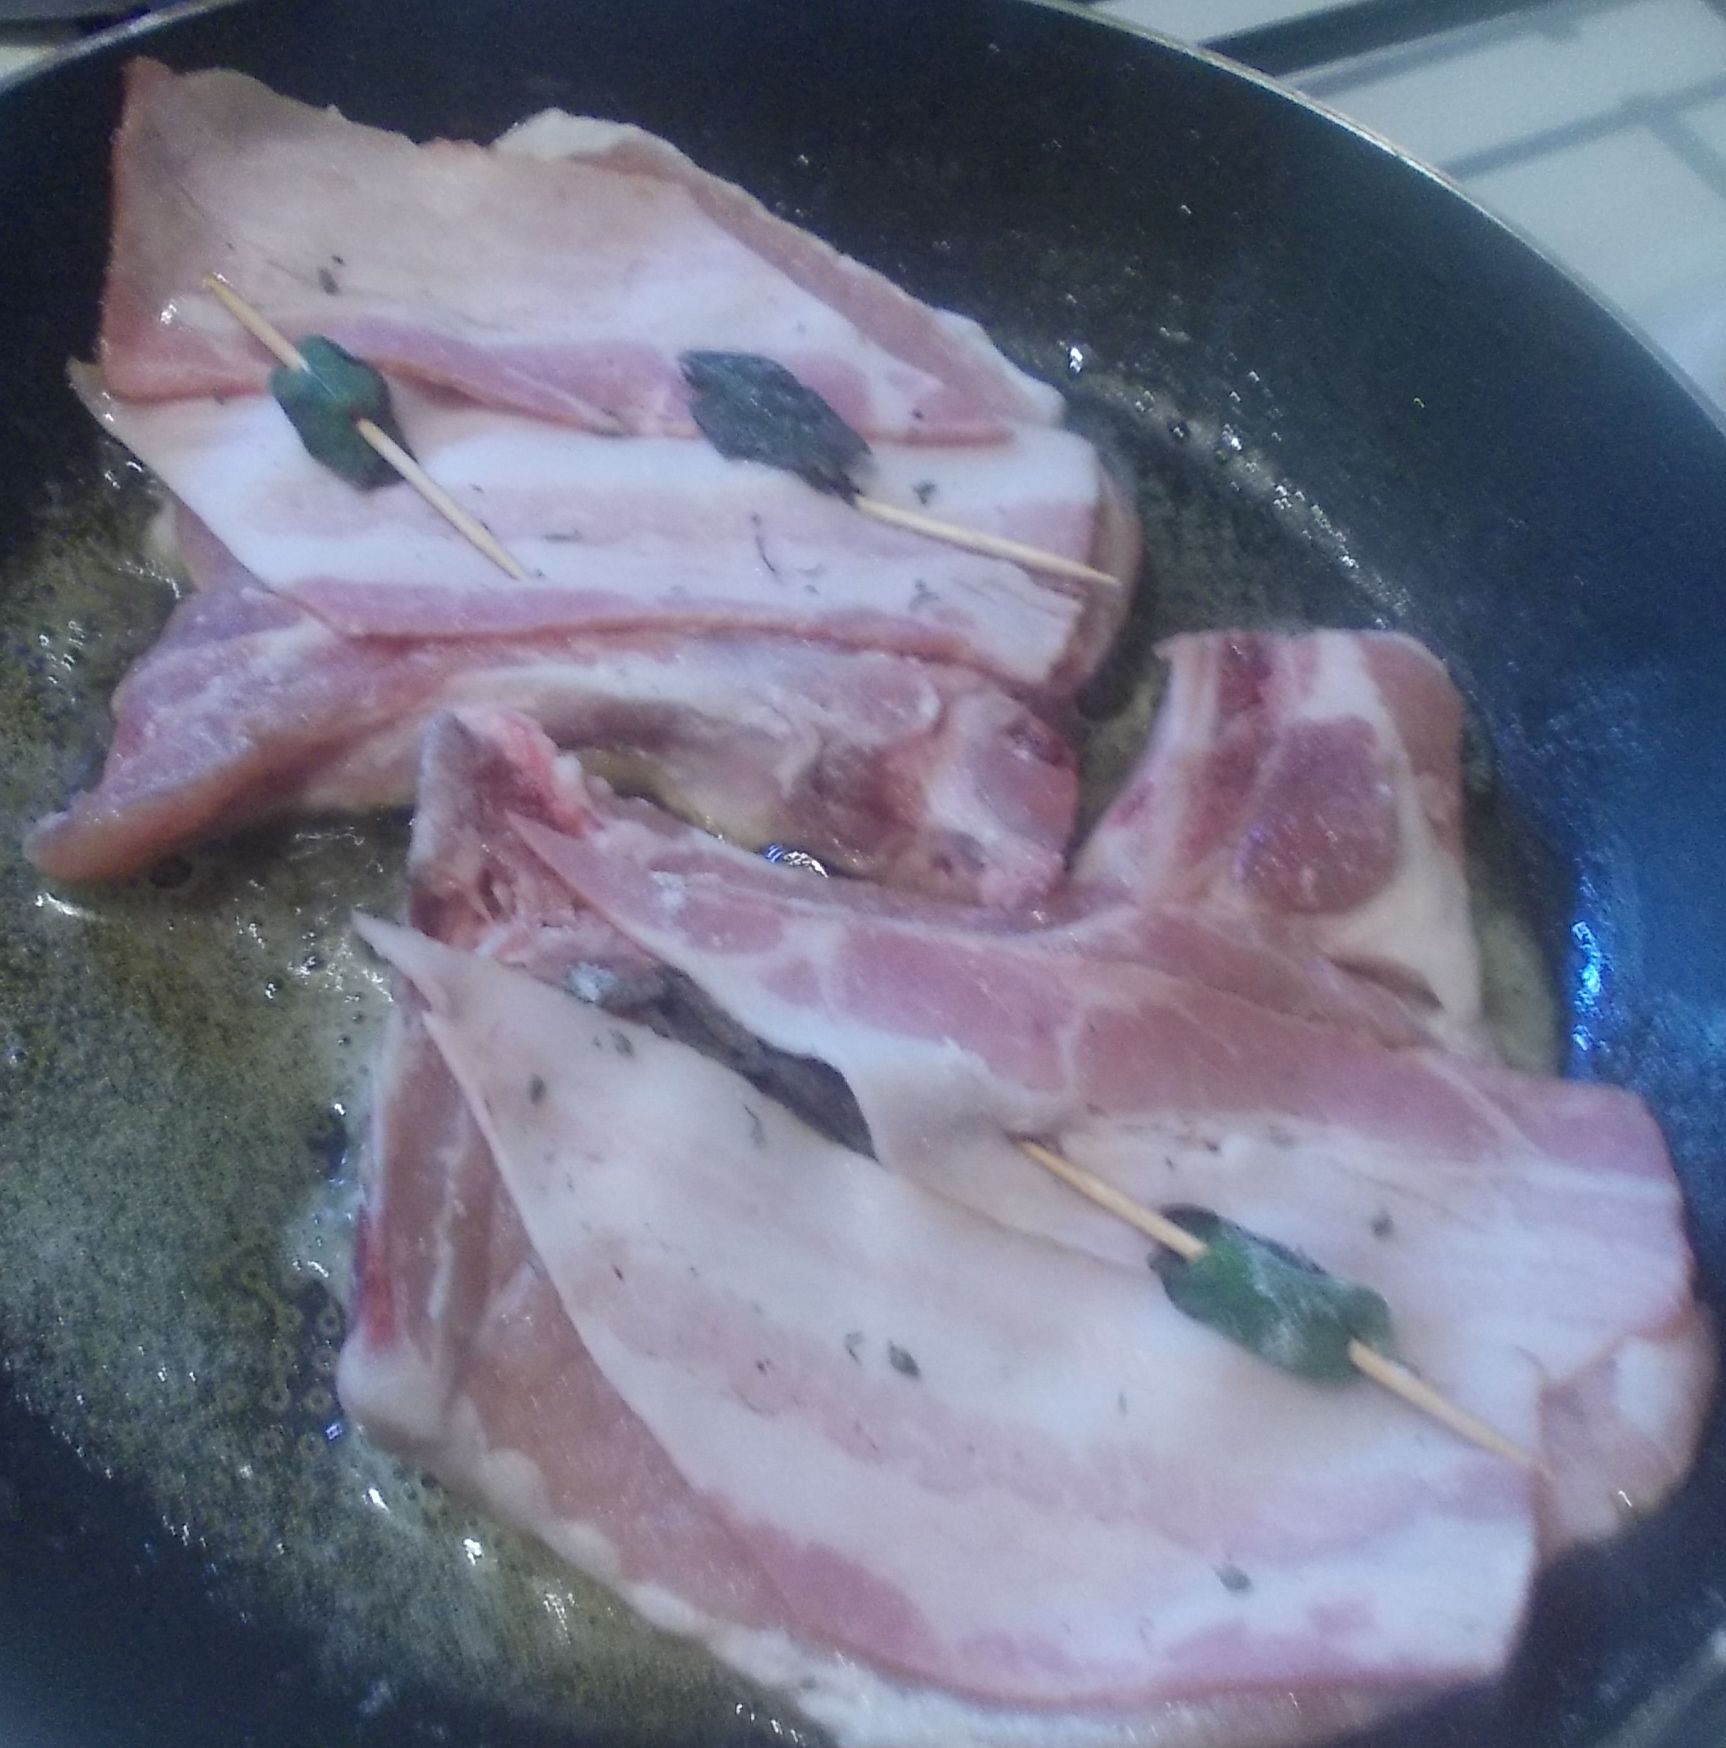 Cotlet de porc cu bacon, salvie, fasii de legume si rondele de cartofi